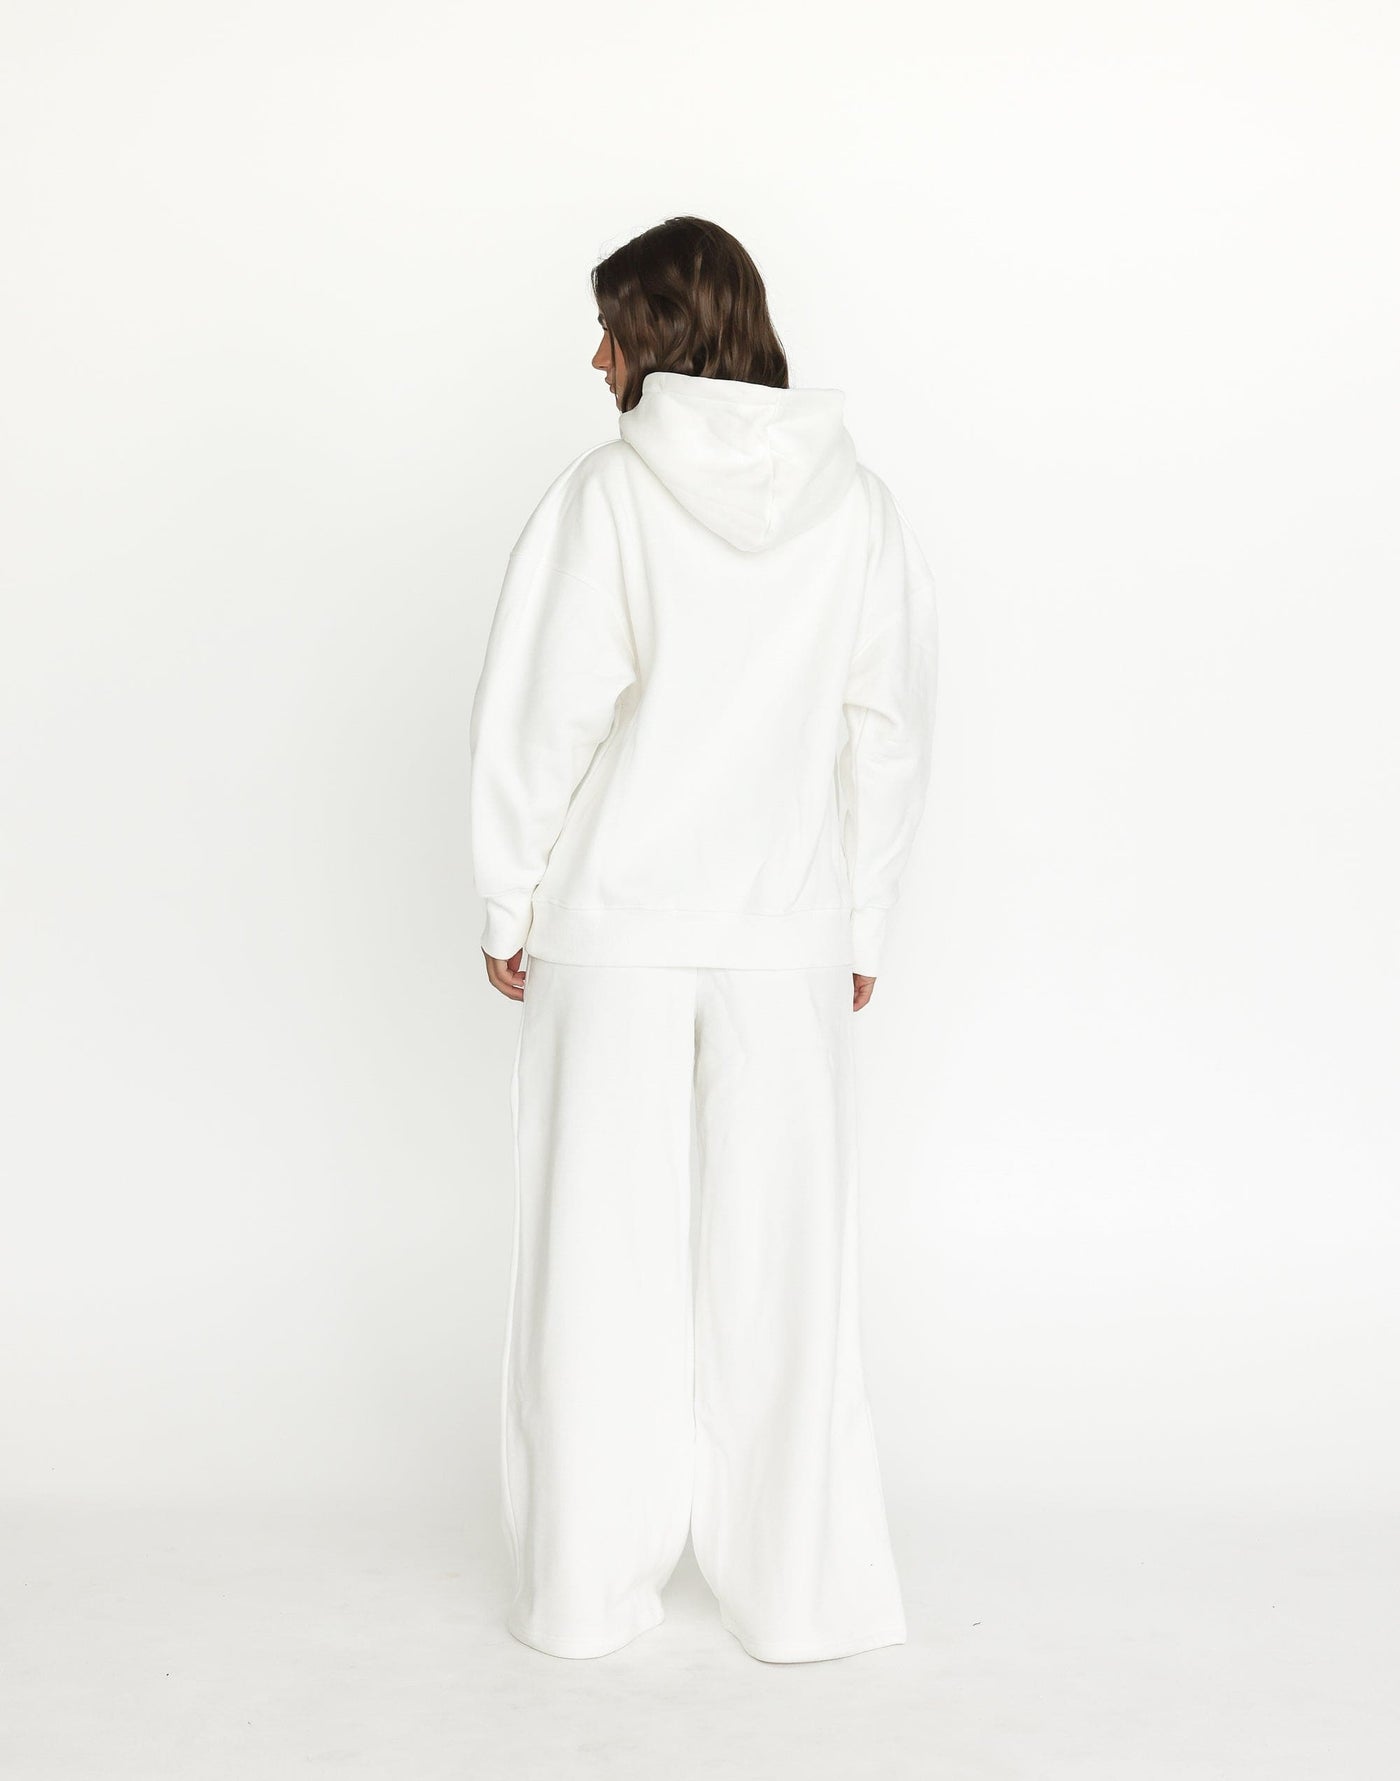 Noah Hoodie (White) | CHARCOAL Exclusive - Oversized Dual Pocket Fleece Lined Hoodie - Women's Top - Charcoal Clothing